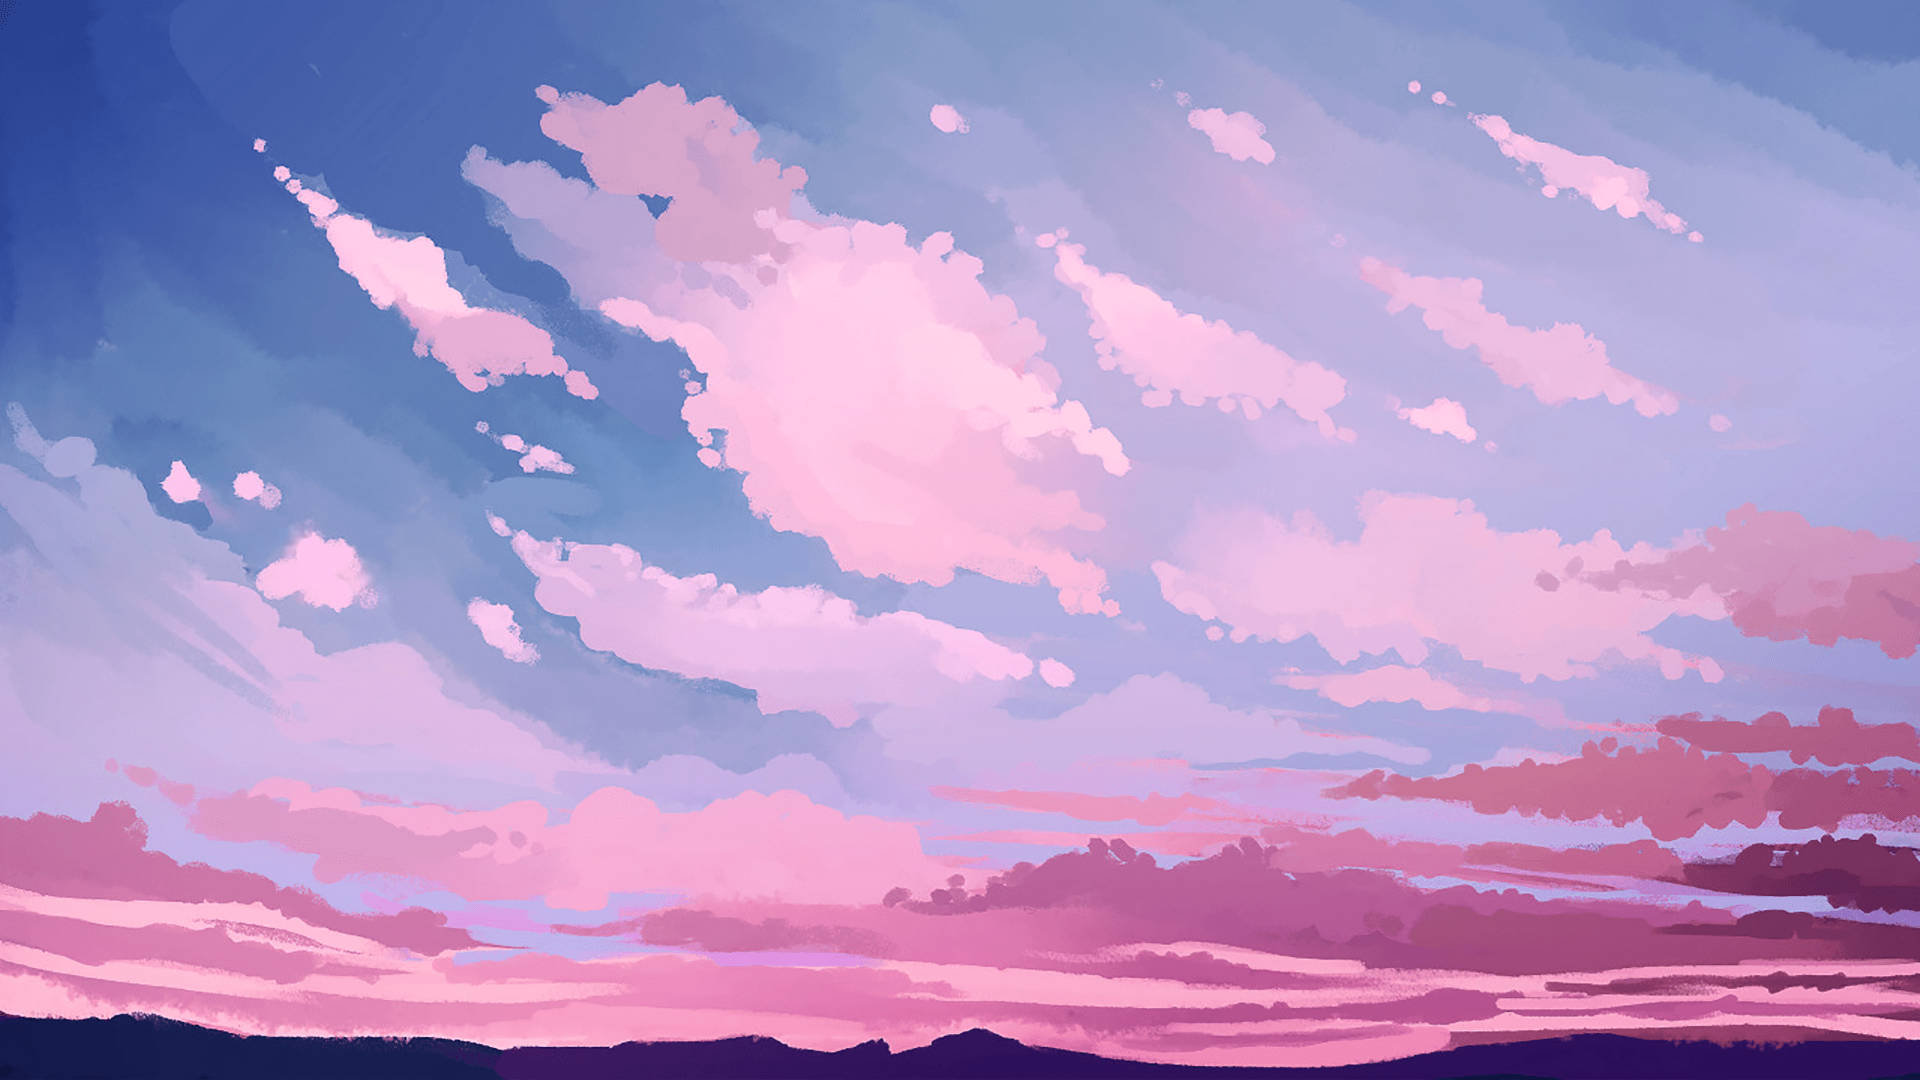 Cloud And Mountain Aesthetic Pink Desktop